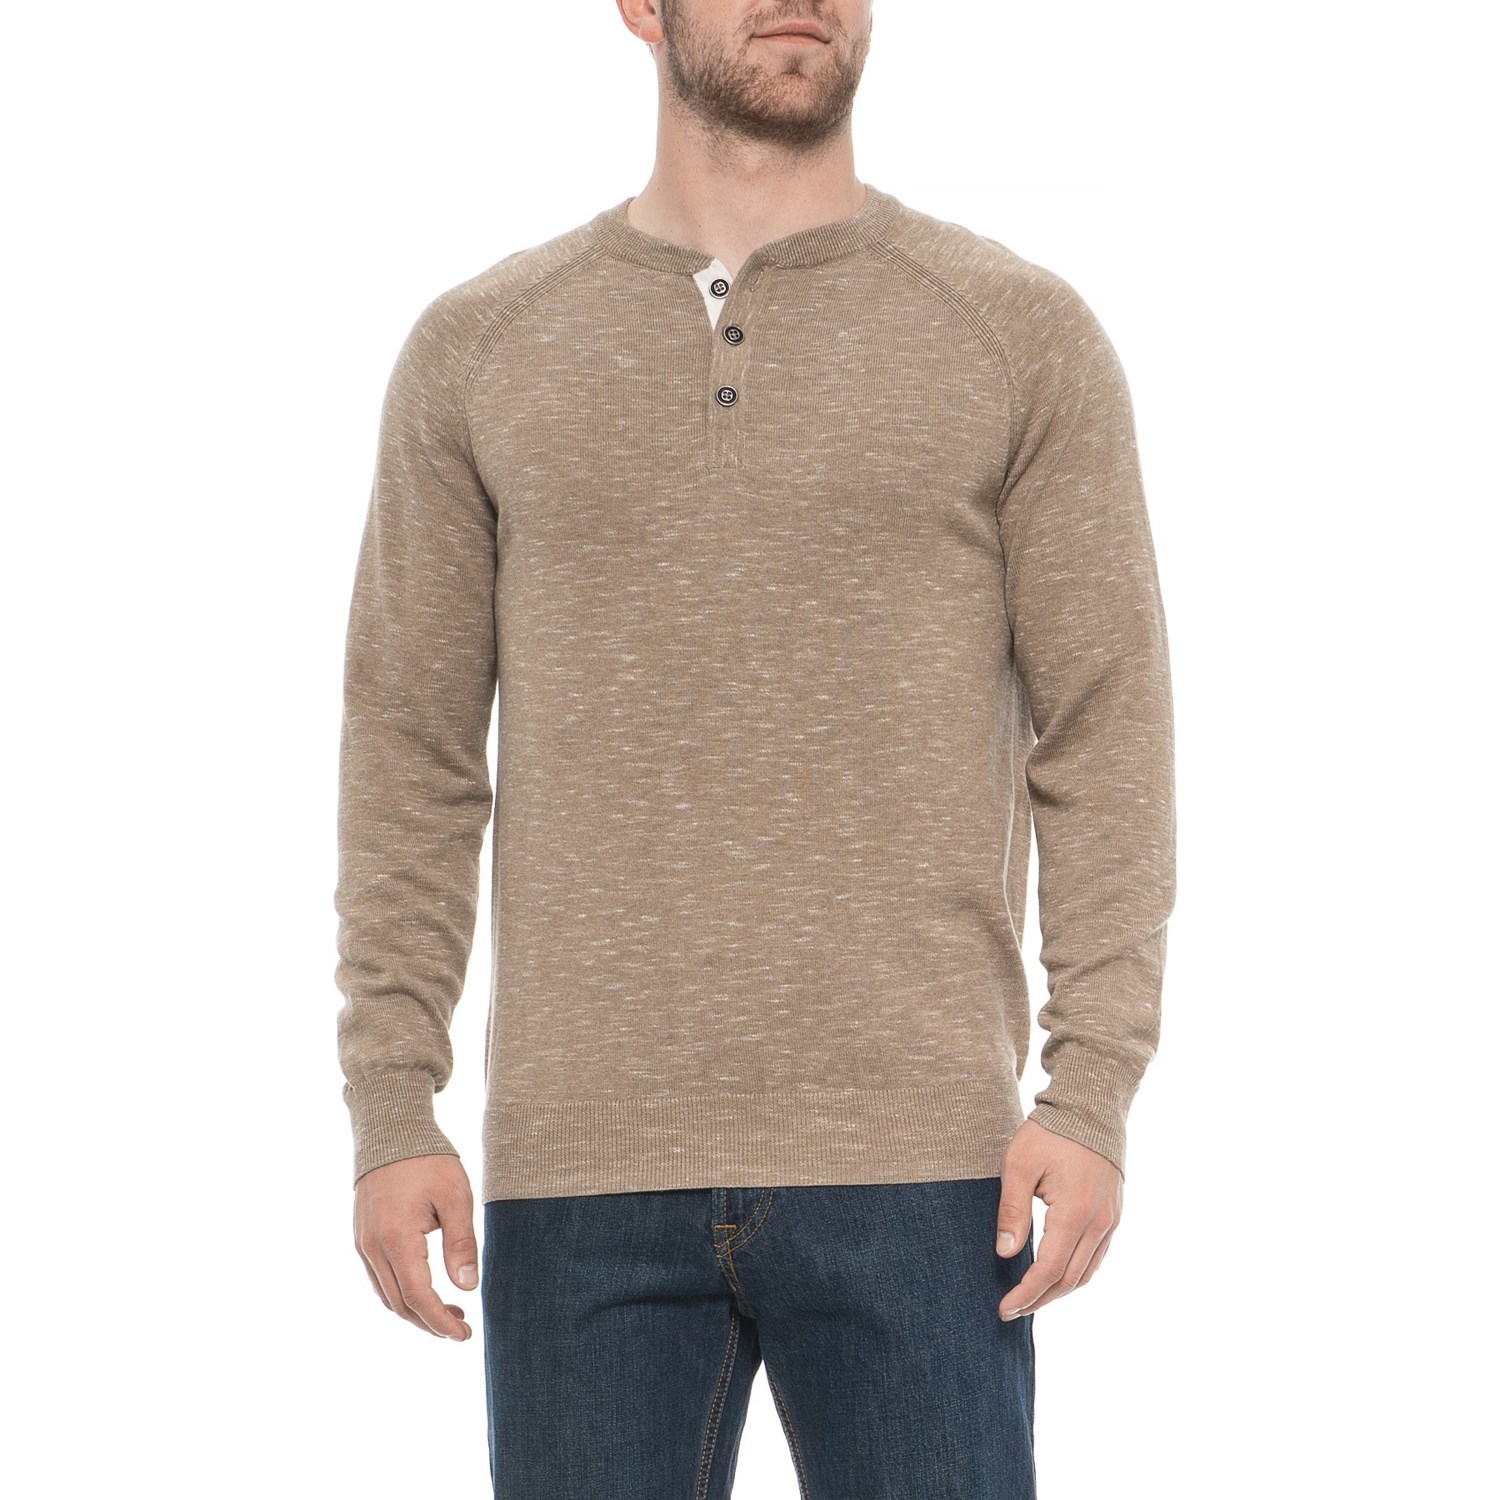 Porter & Ash Porter Ash Space-Dye Henley Shirt (For Men) - Save 65%